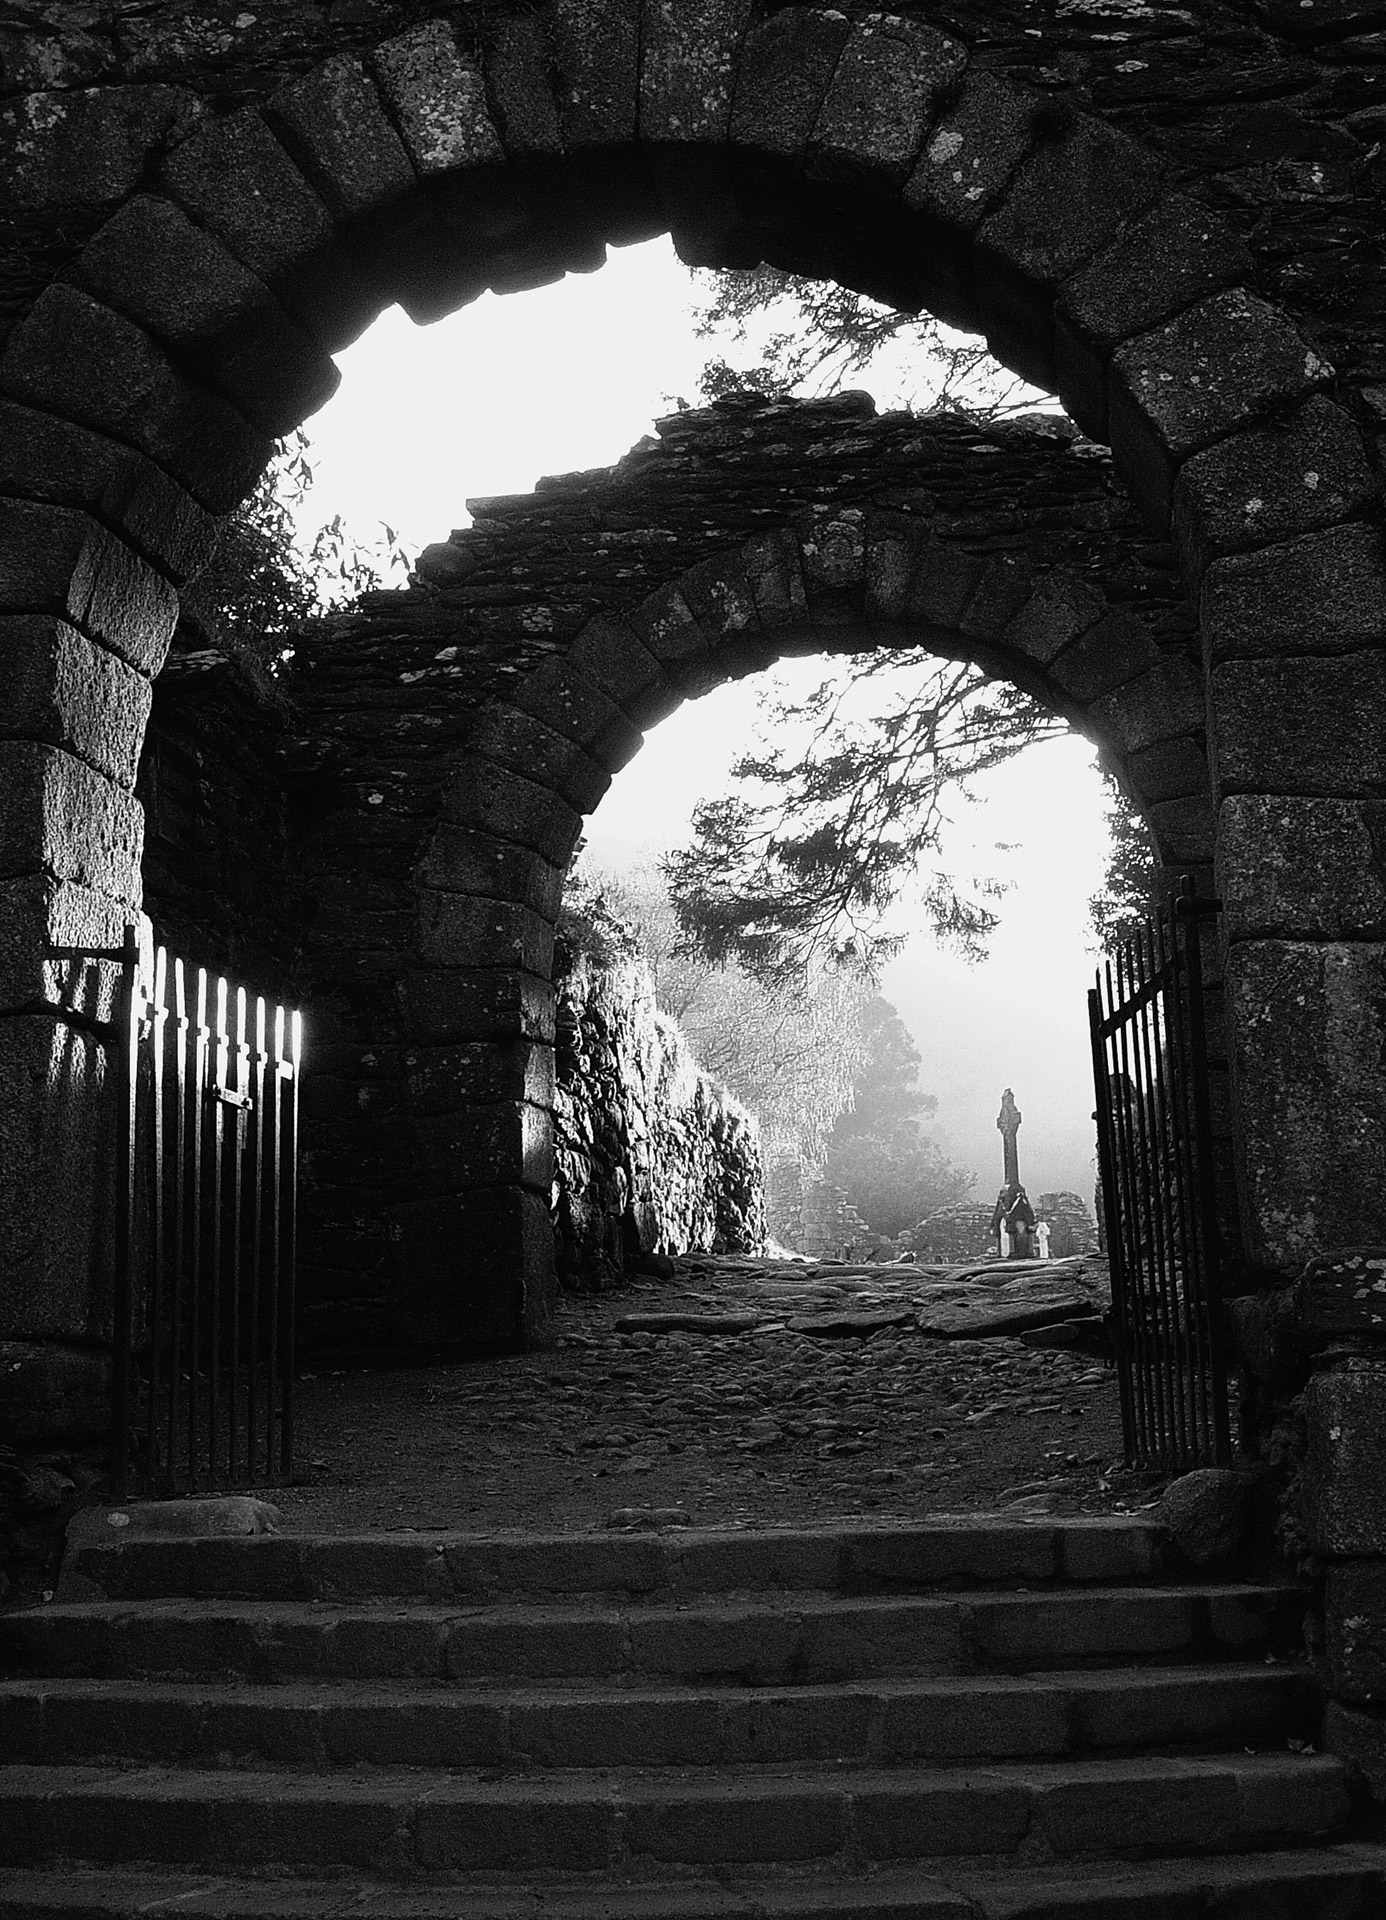 Irlandia, Glendalough, b&w, black and white, cmentarz, podróże, podróże po Europie, fotografia Monika Turska